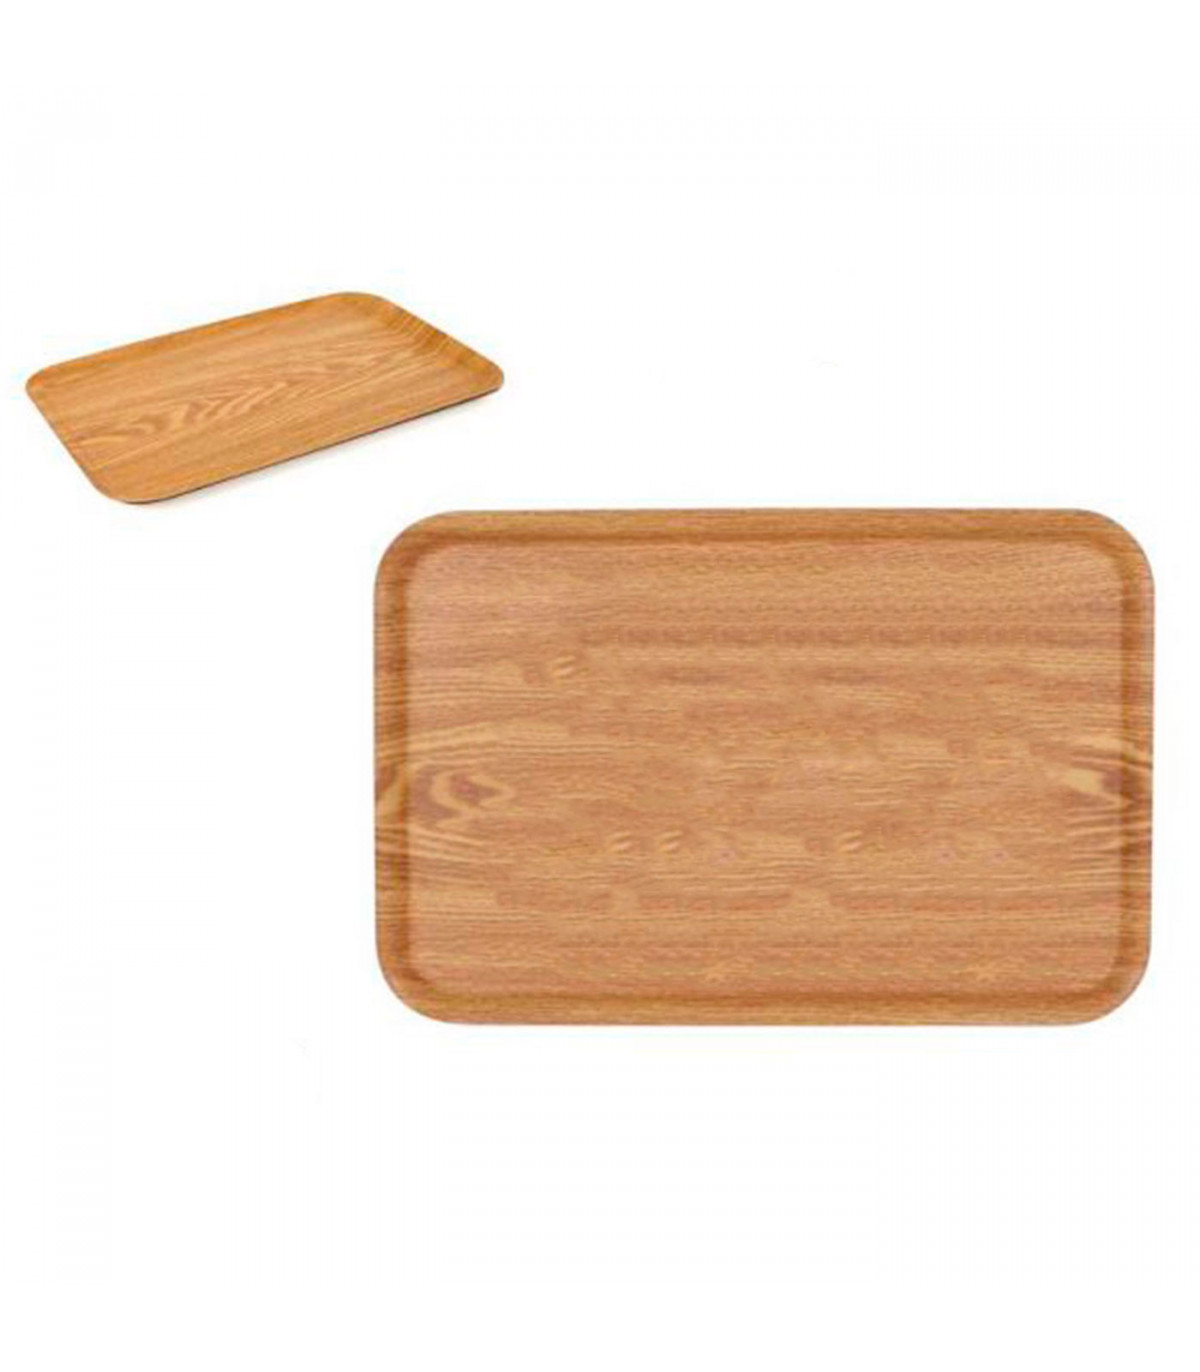 Bandeja rectangular de madera y melamina 43 x 29 cm para servir comida,  transportar platos, vasos, alimentos, apta para lavavaji